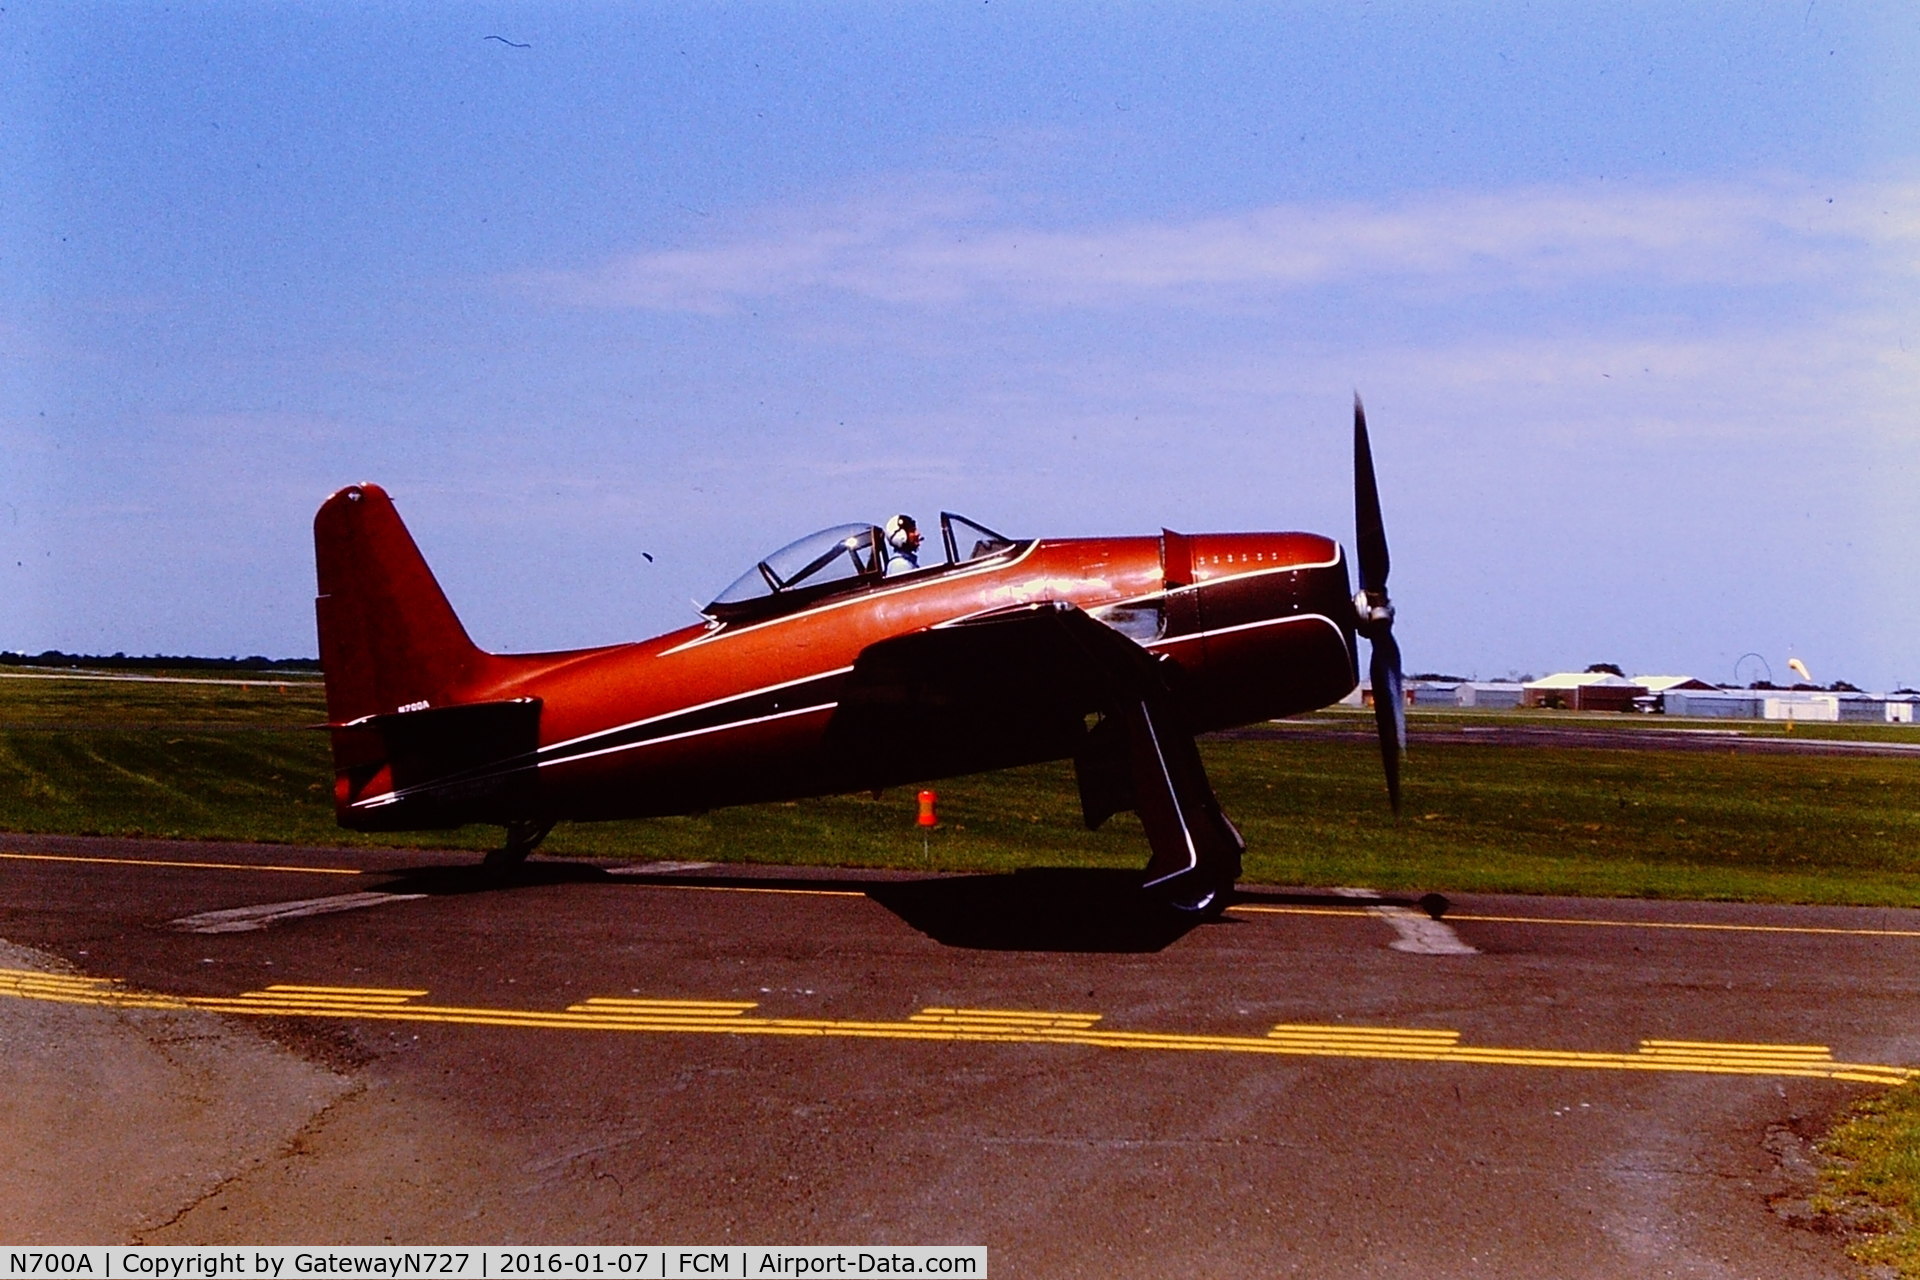 N700A, 1950 Grumman G-58B Gulfhawk C/N D.1262, Taken from the Classic Aviation ramp. Summer, 1986.